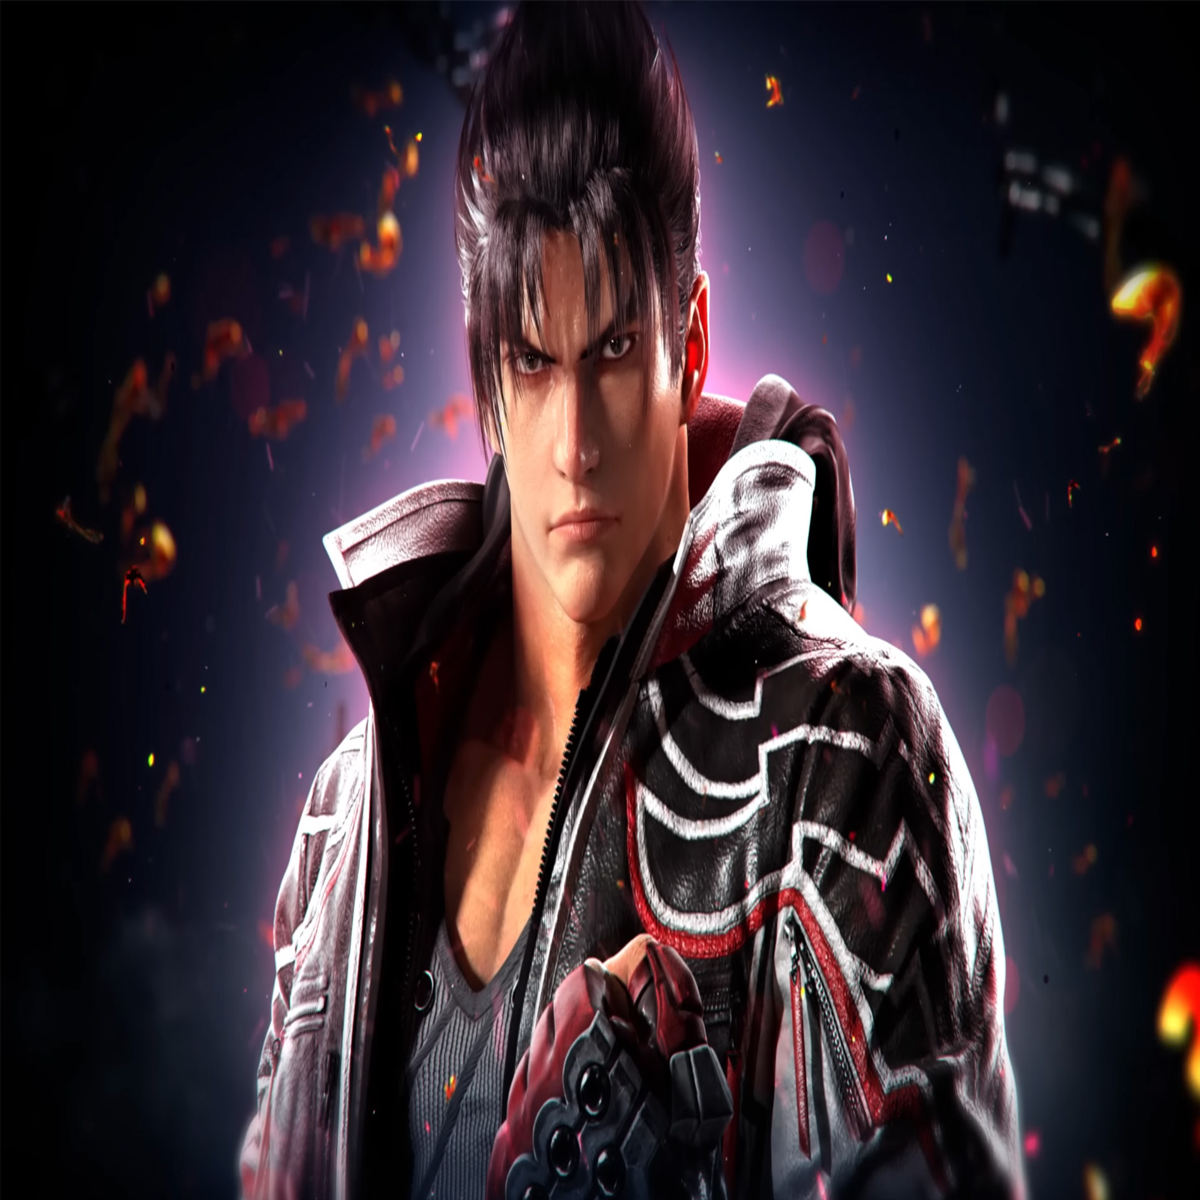 Tekken 8 game director reveals details on new characters Reina and